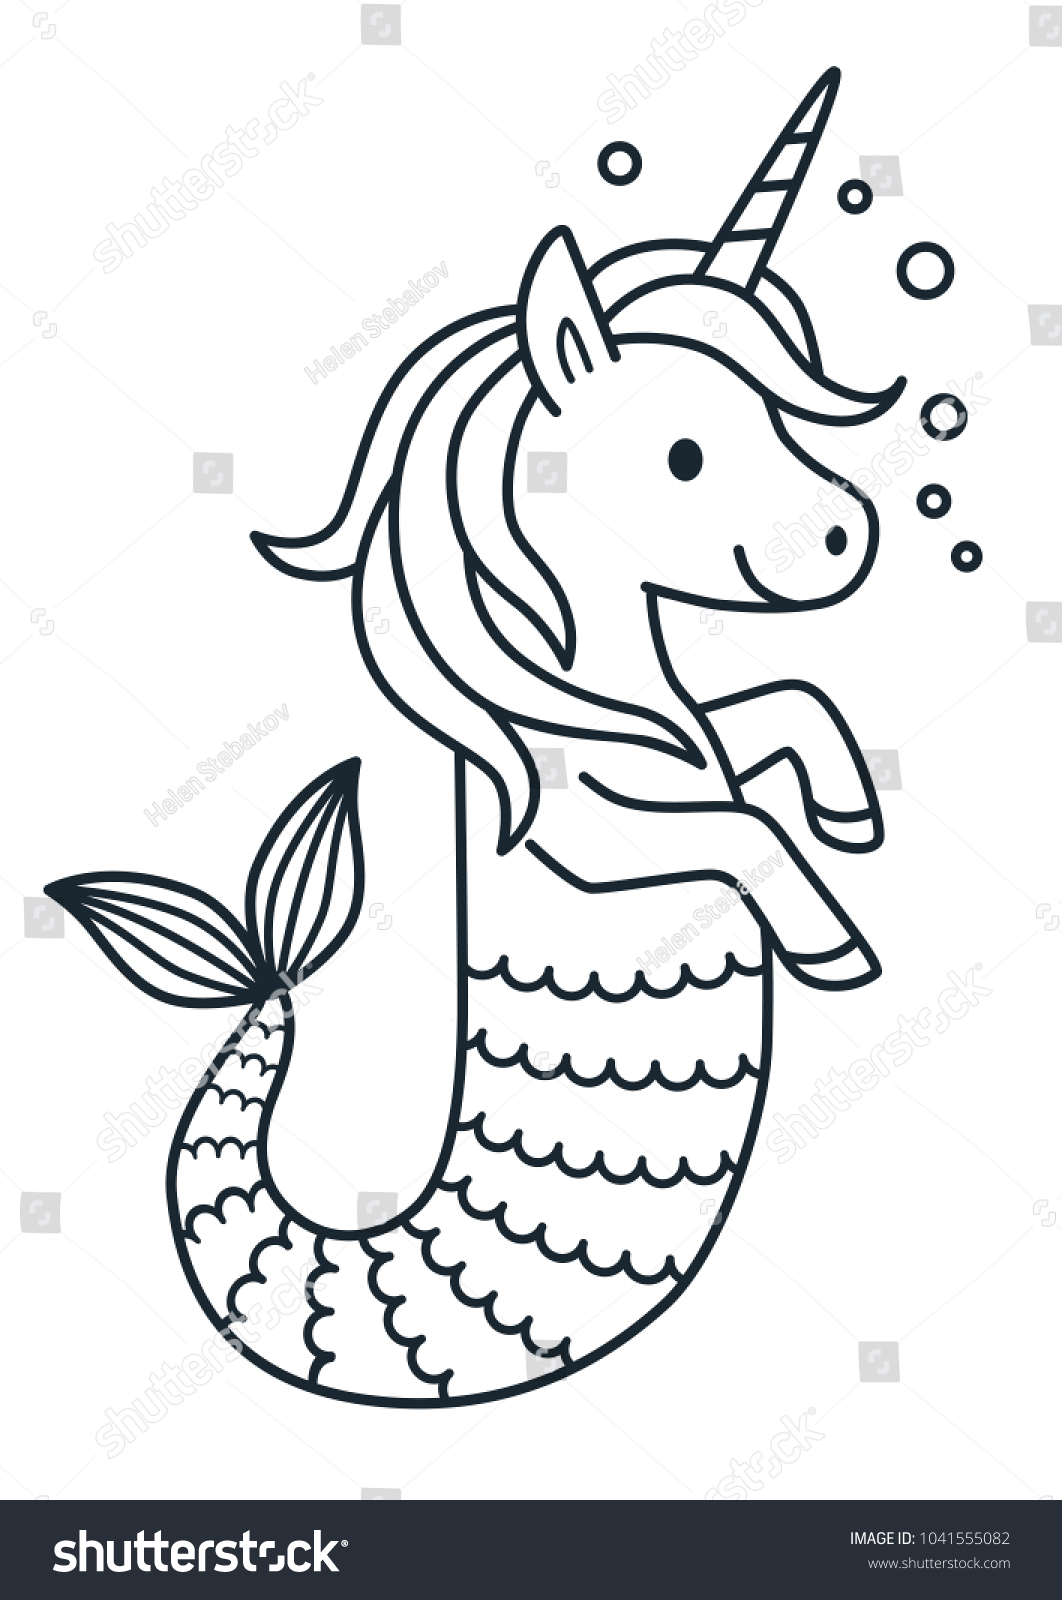 Featured image of post Unicorn Mermaid Colouring : Mermaid and unicorn coloring pages cute unicorn mermaid coloring page cartoon illustration stock with #2823741 mermaid with unicorn dolphins coloring page #2823742